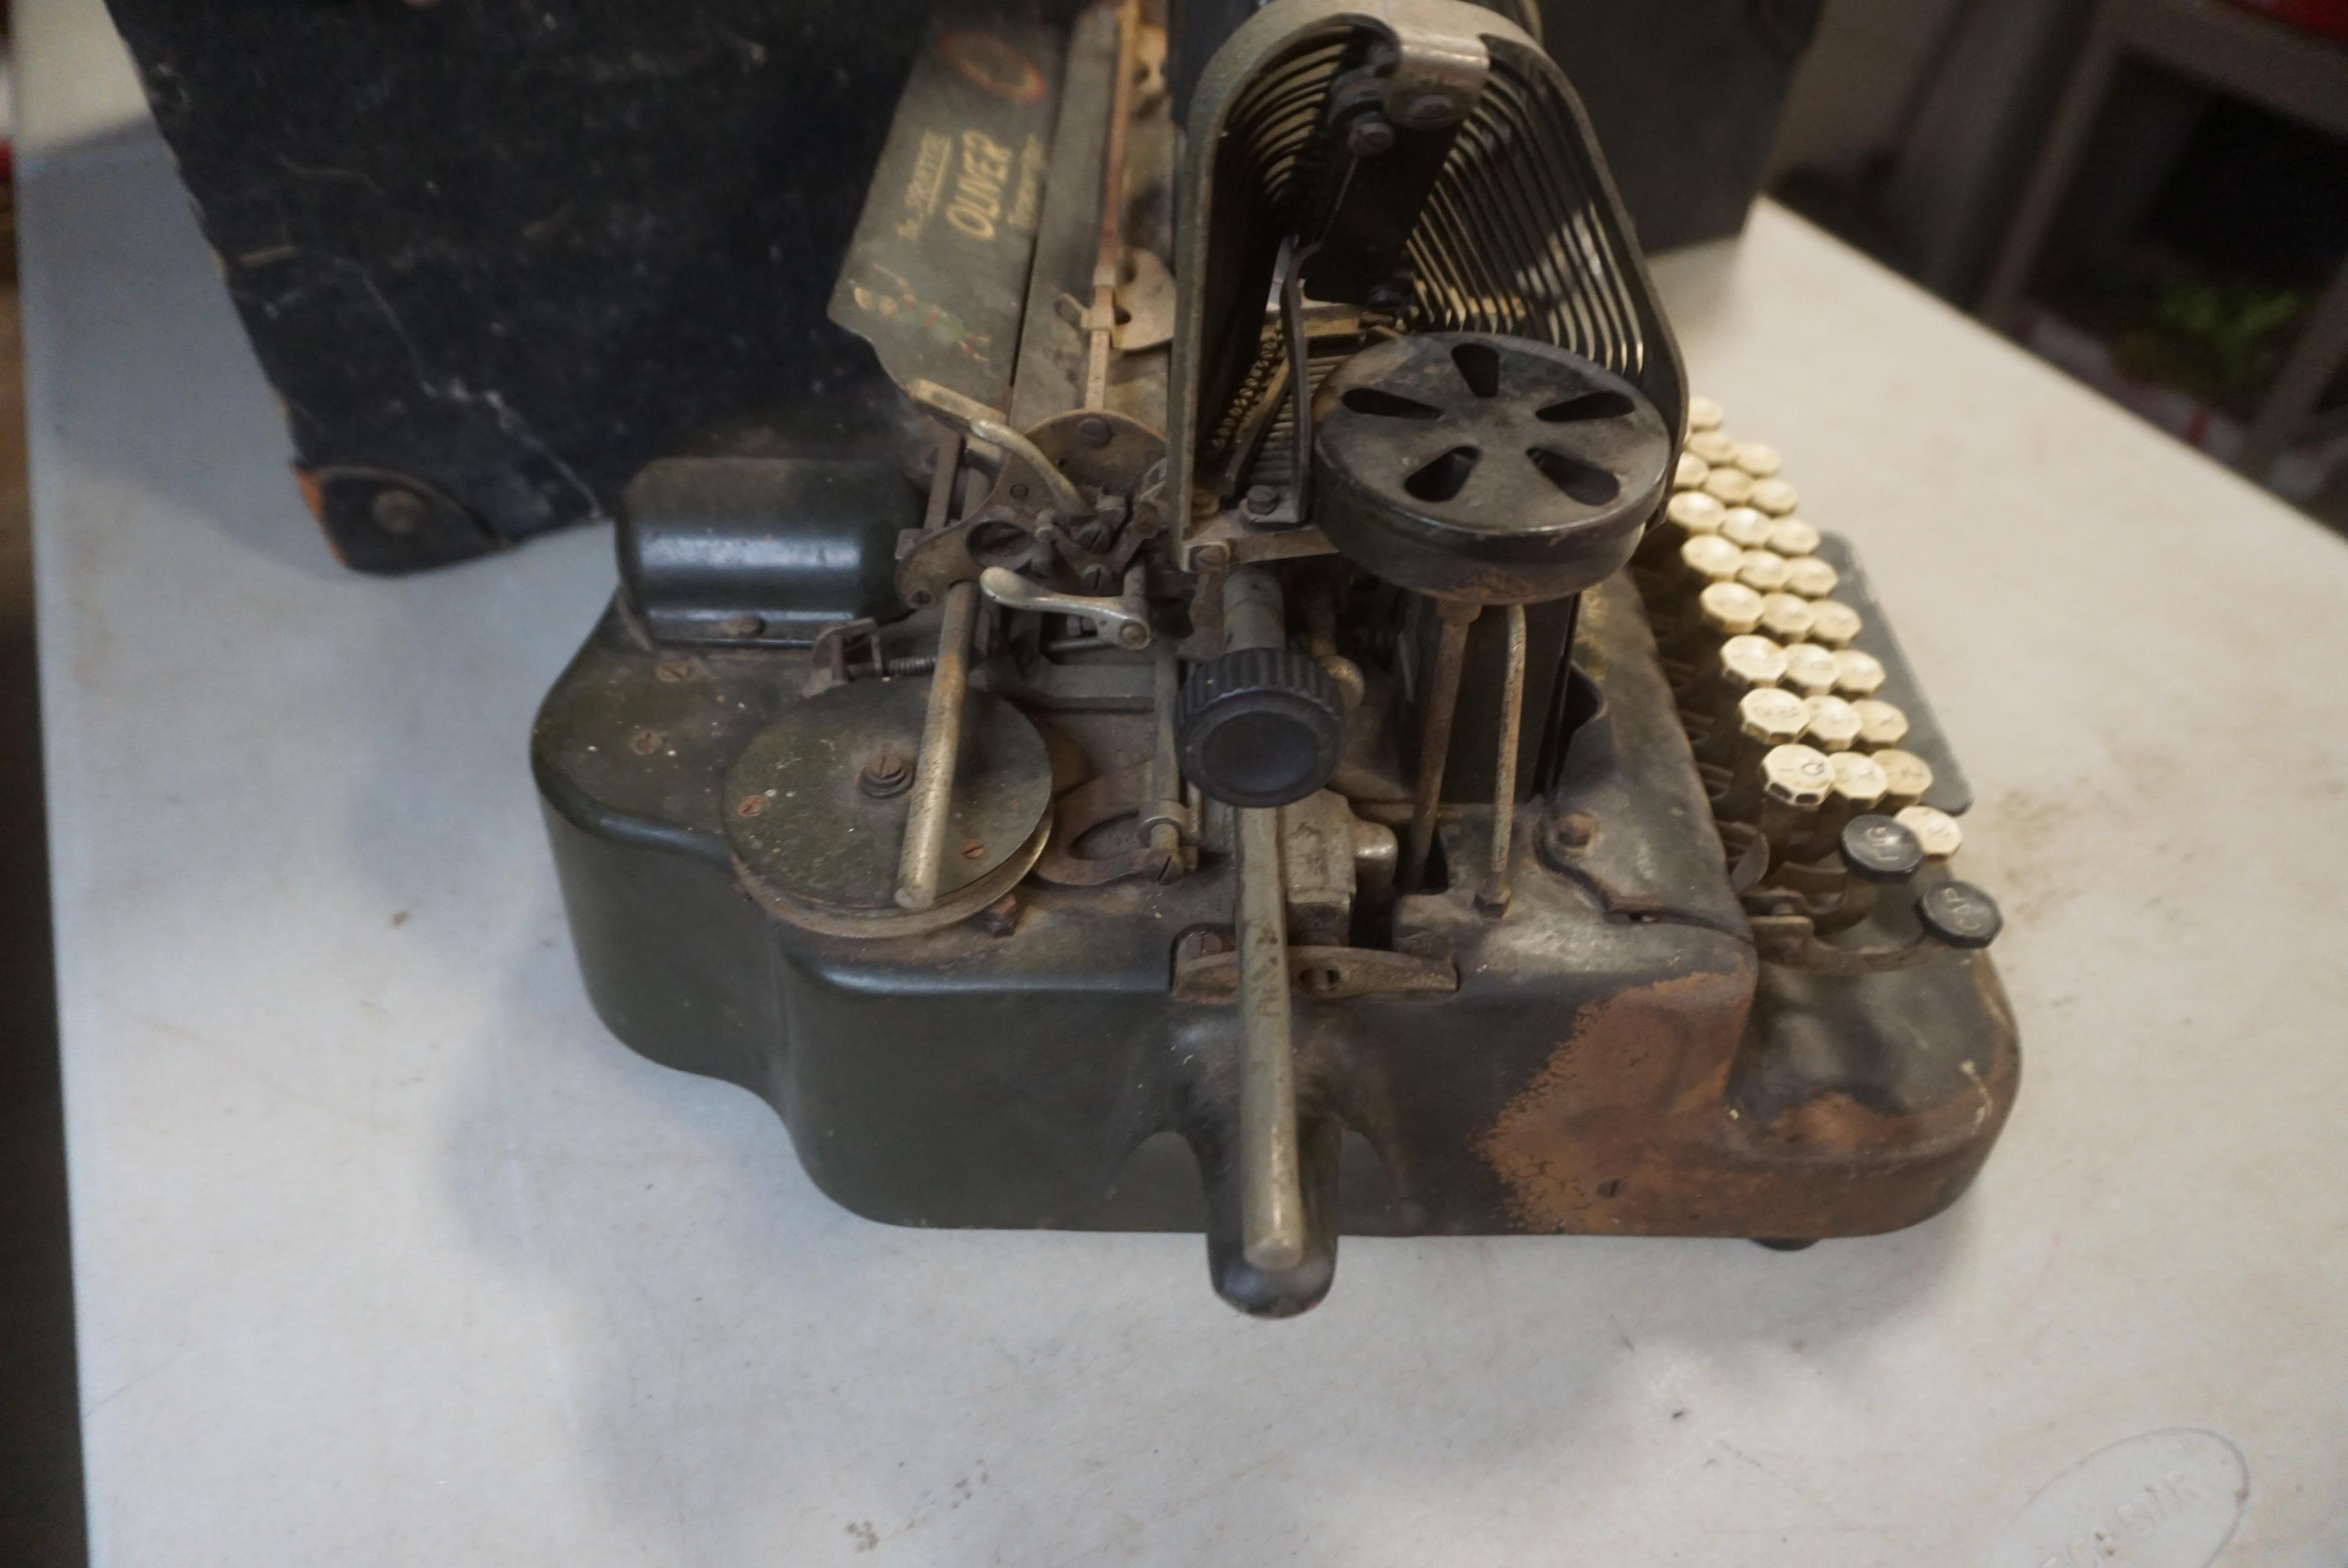 Oliver Standard Visible Writer - The Printype Oliver Typewriter